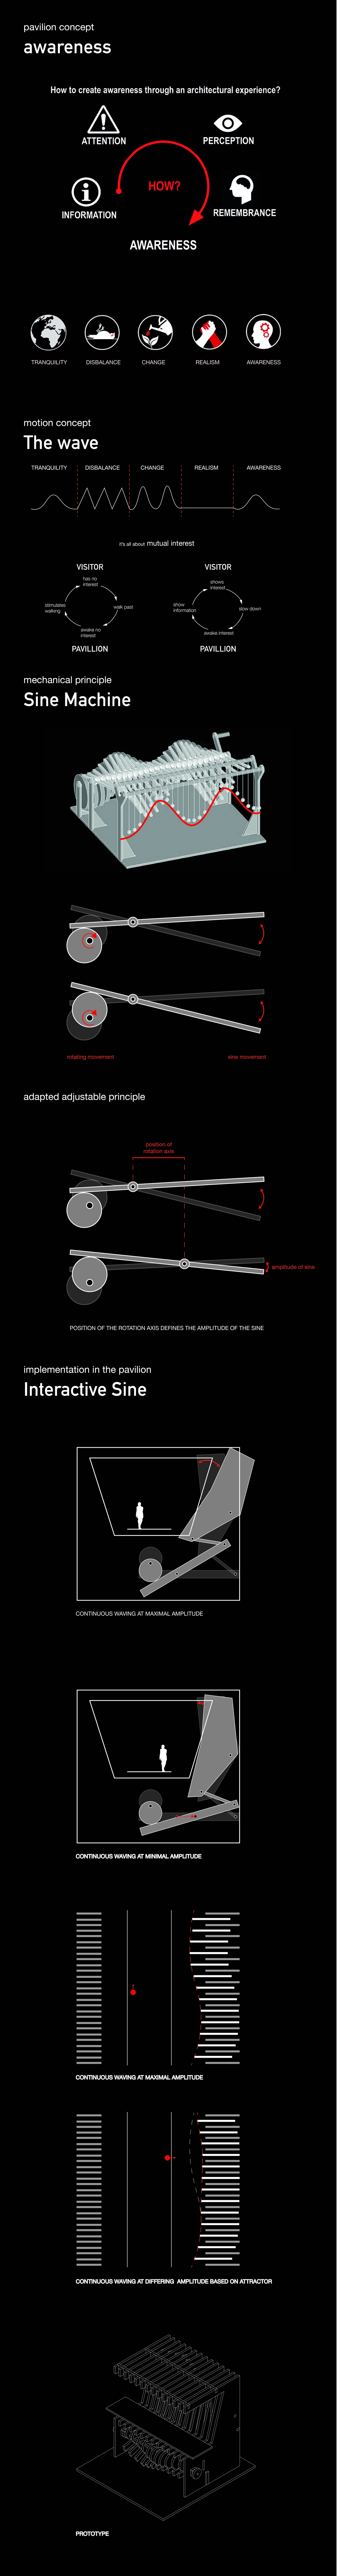 SINE-presentation.jpg